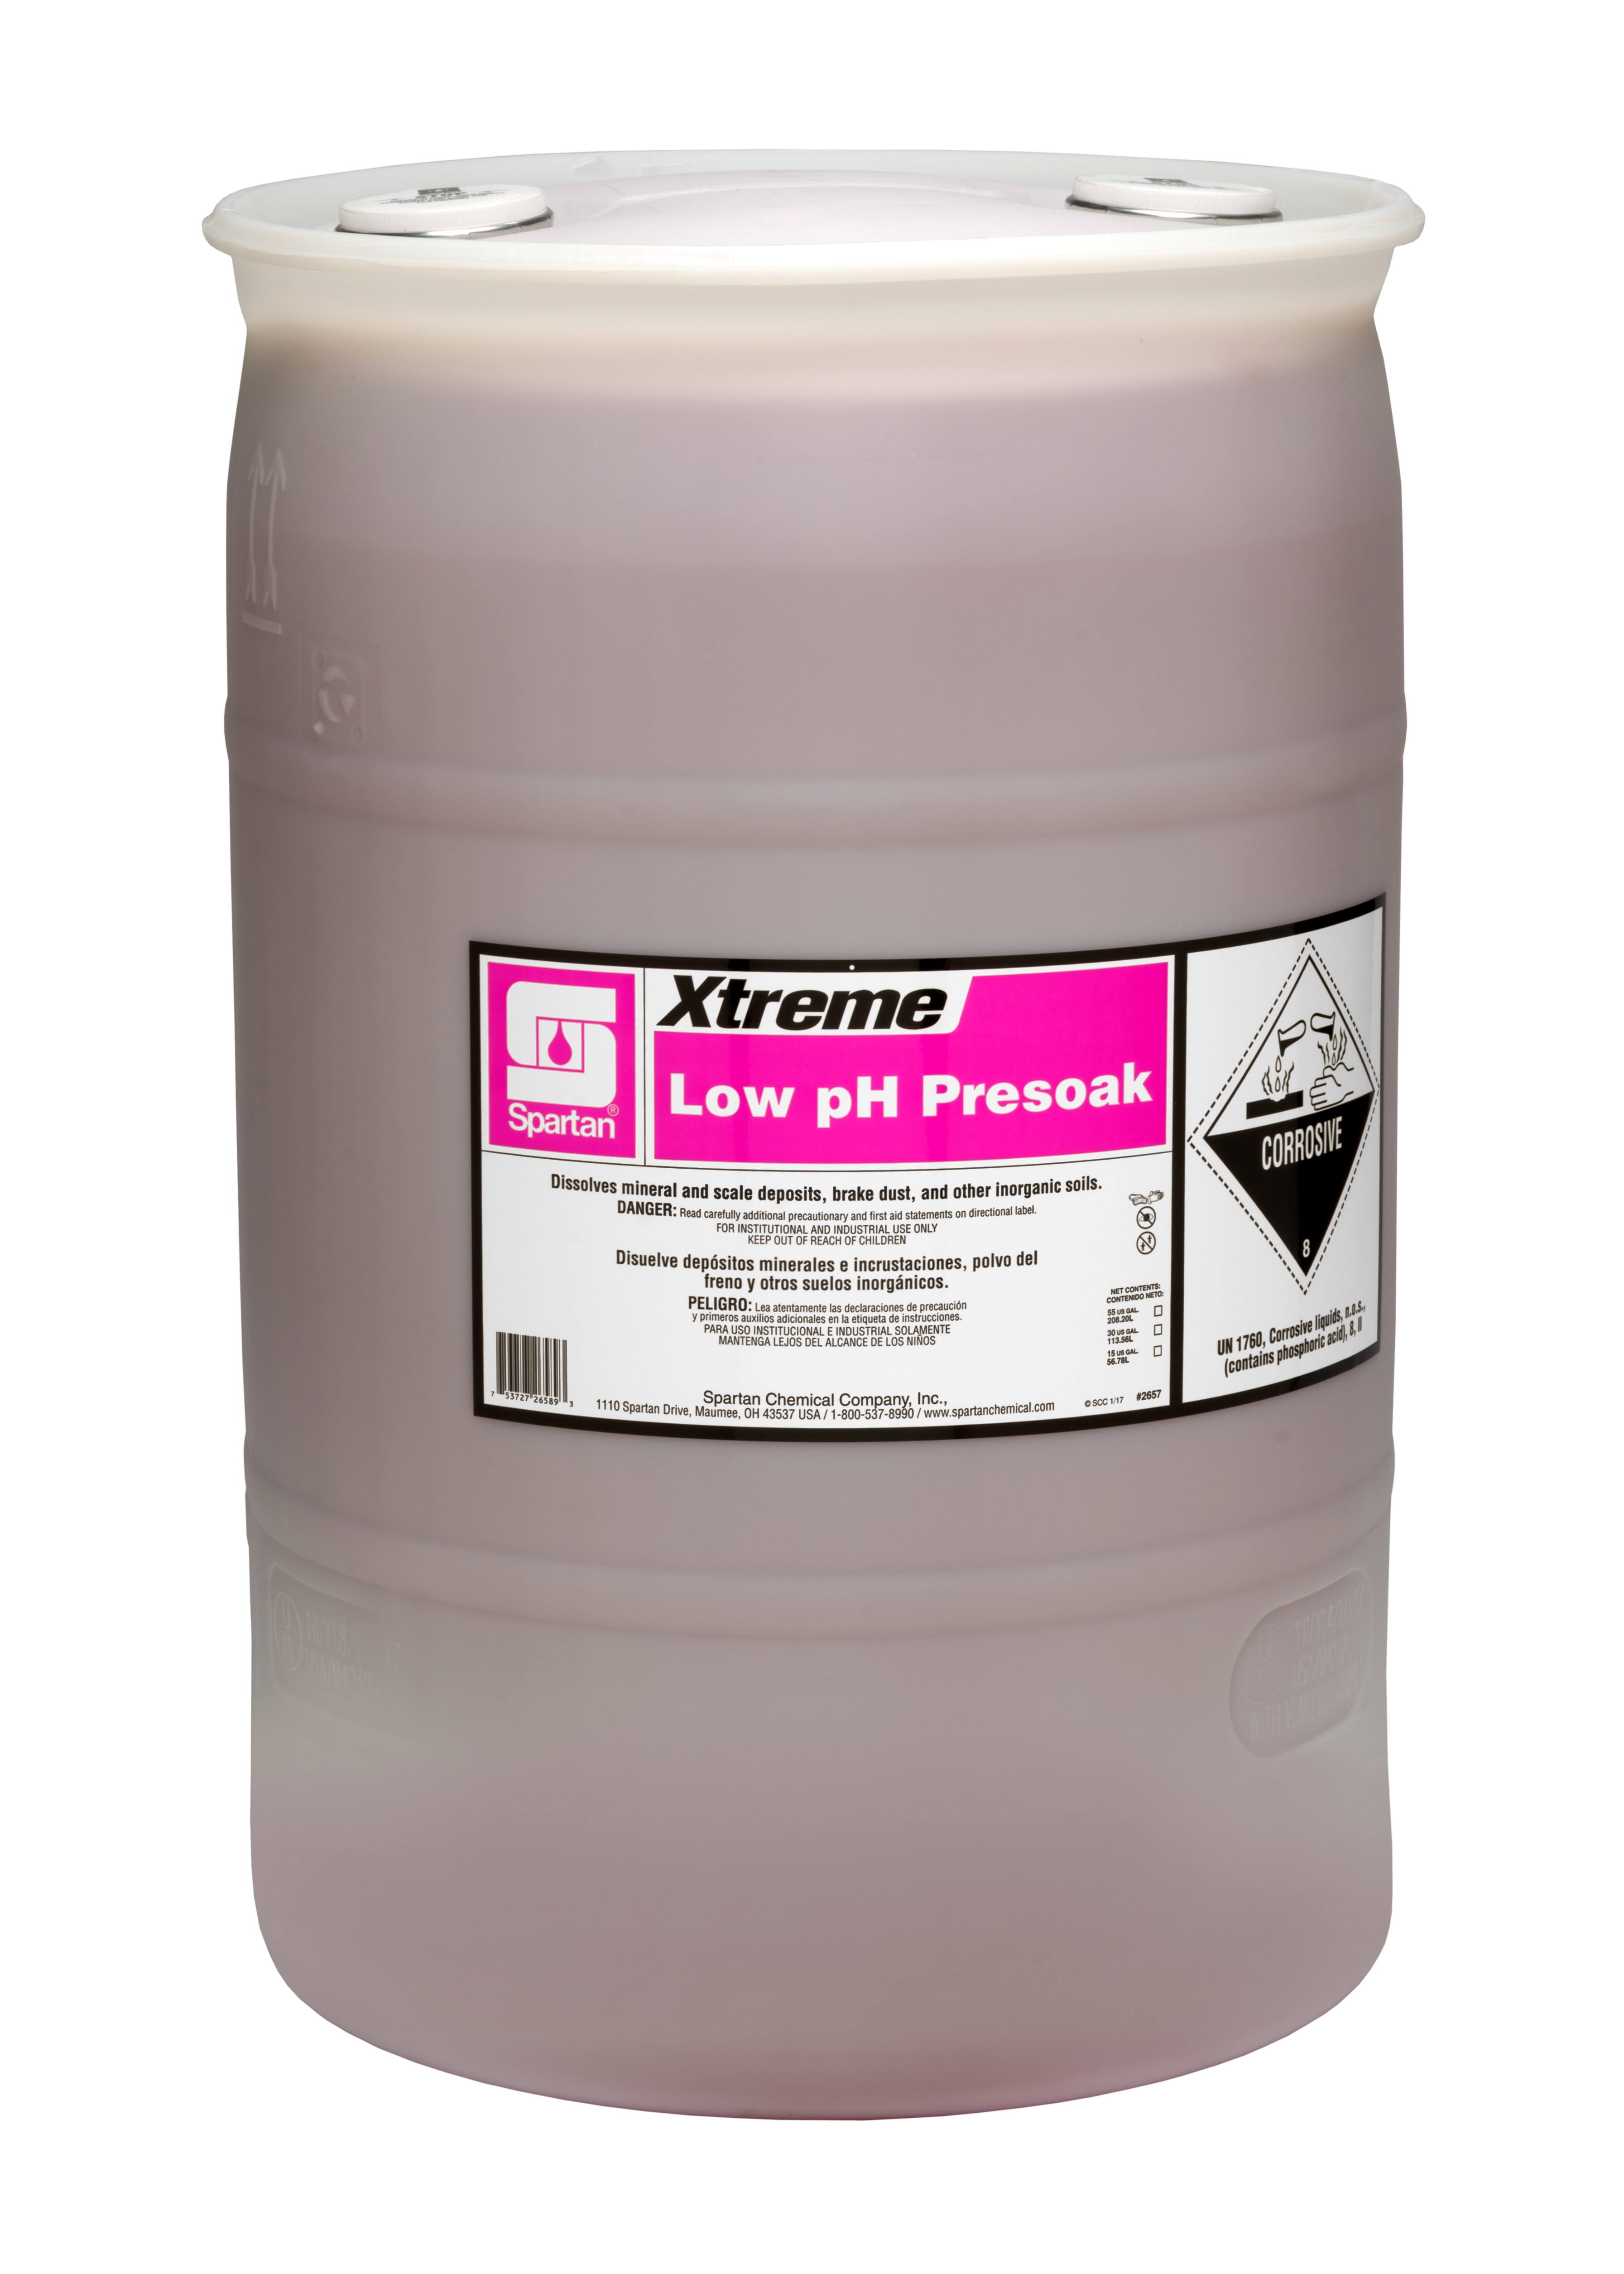 Spartan Chemical Company Xtreme Low pH Presoak, 30 GAL DRUM